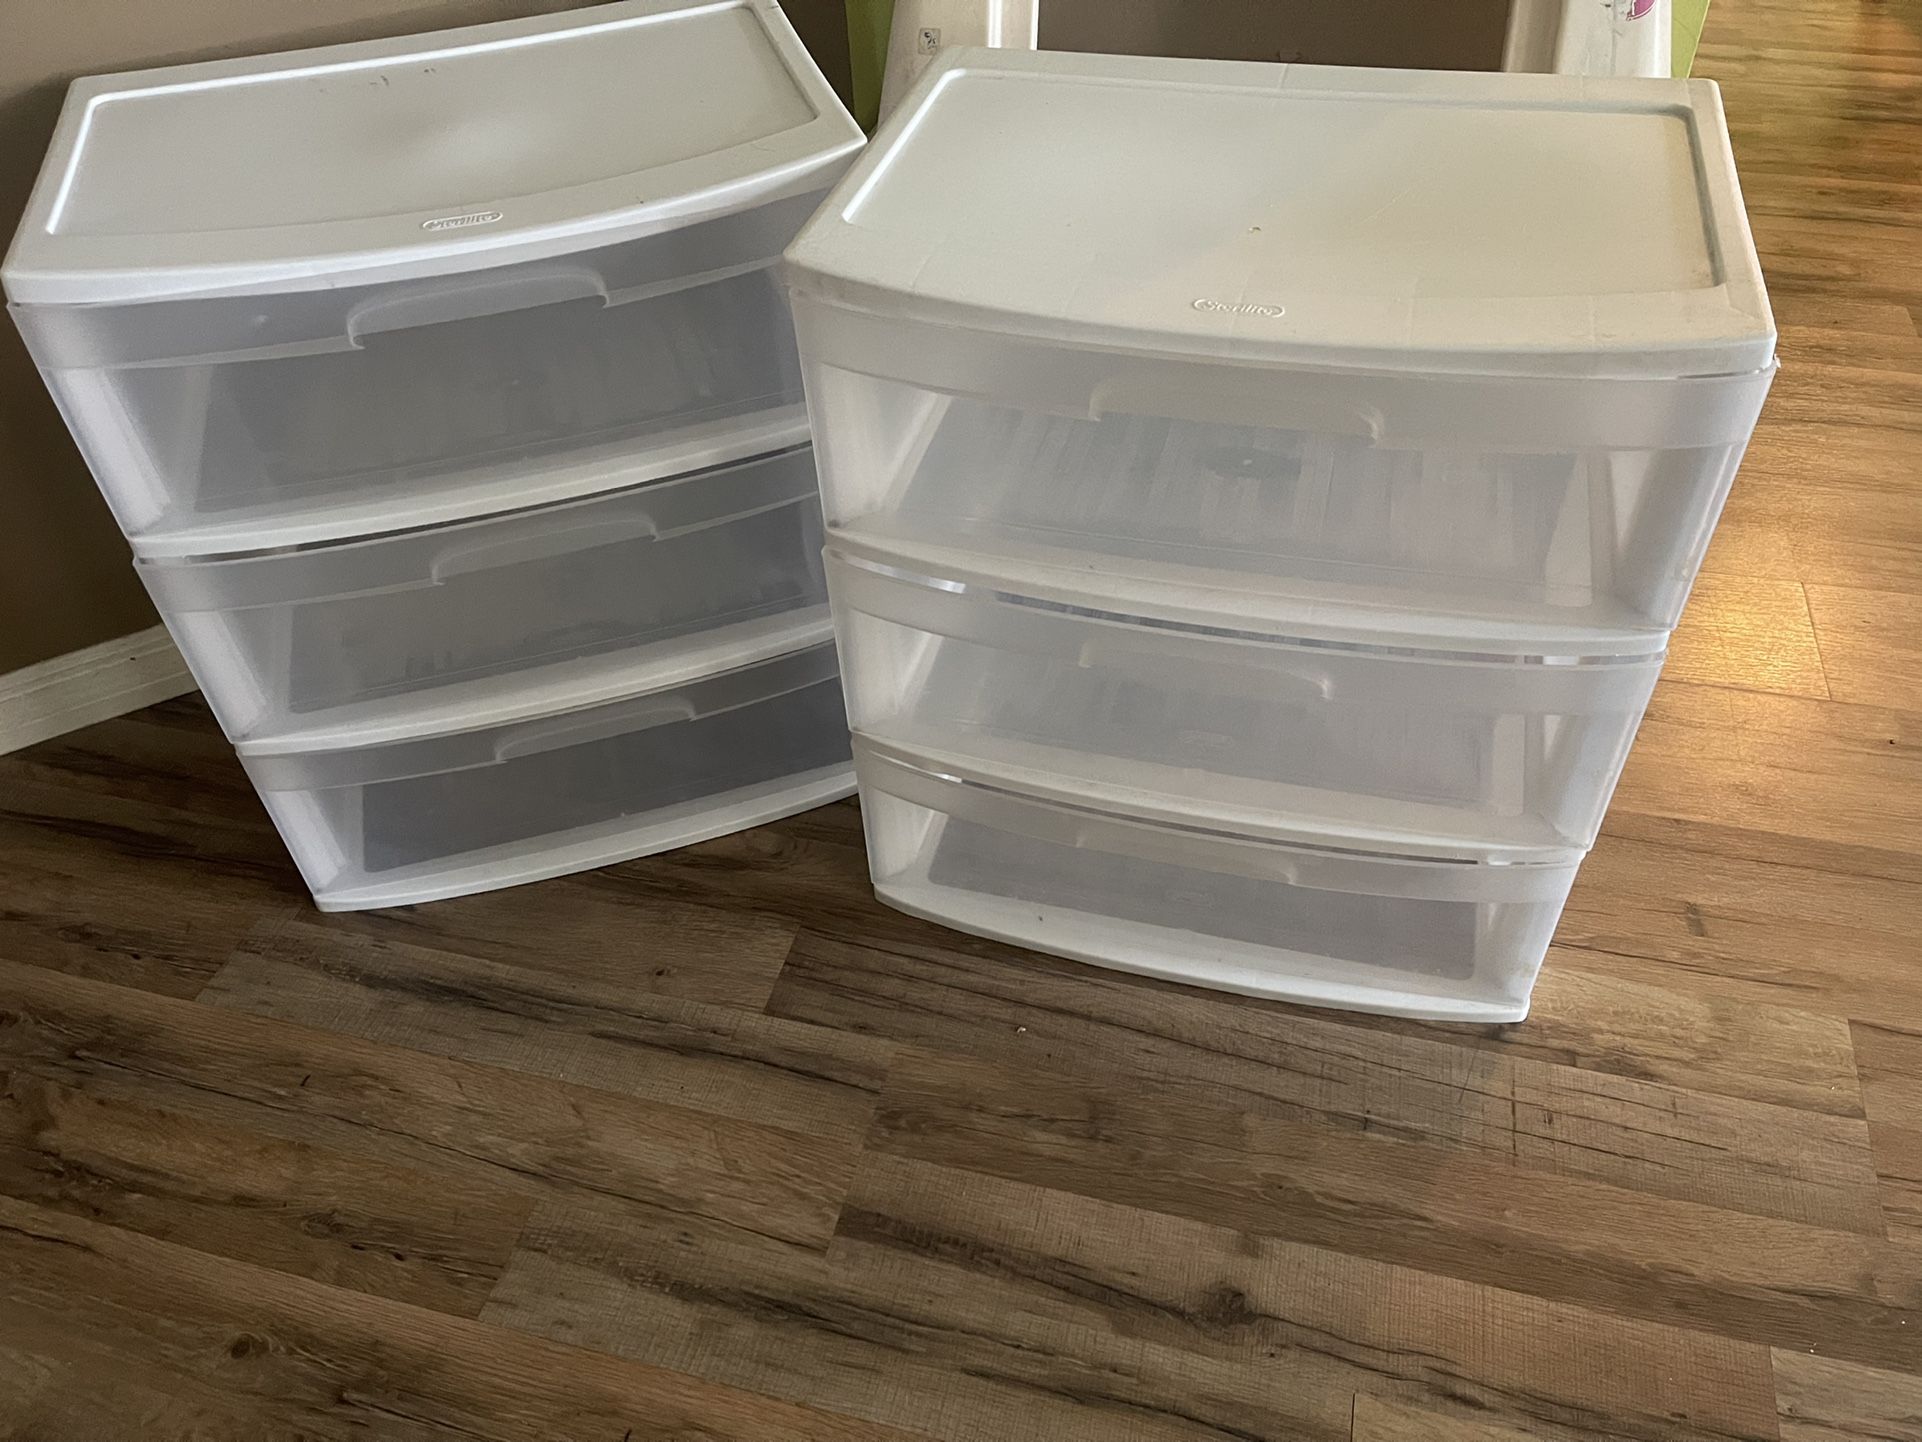 White plastic drawers